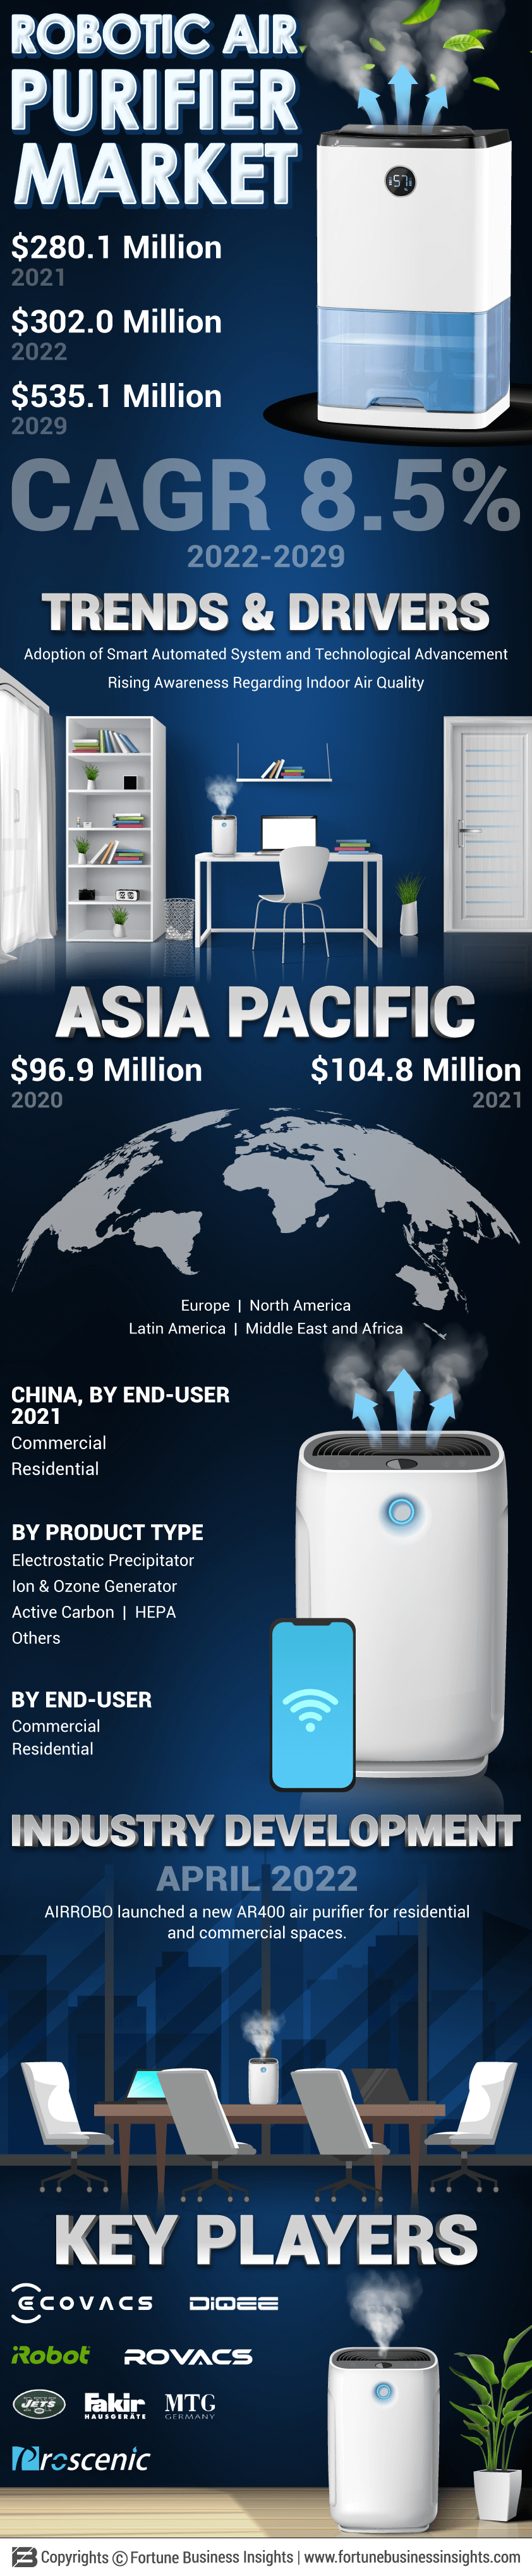 Robotic Air Purifier Market